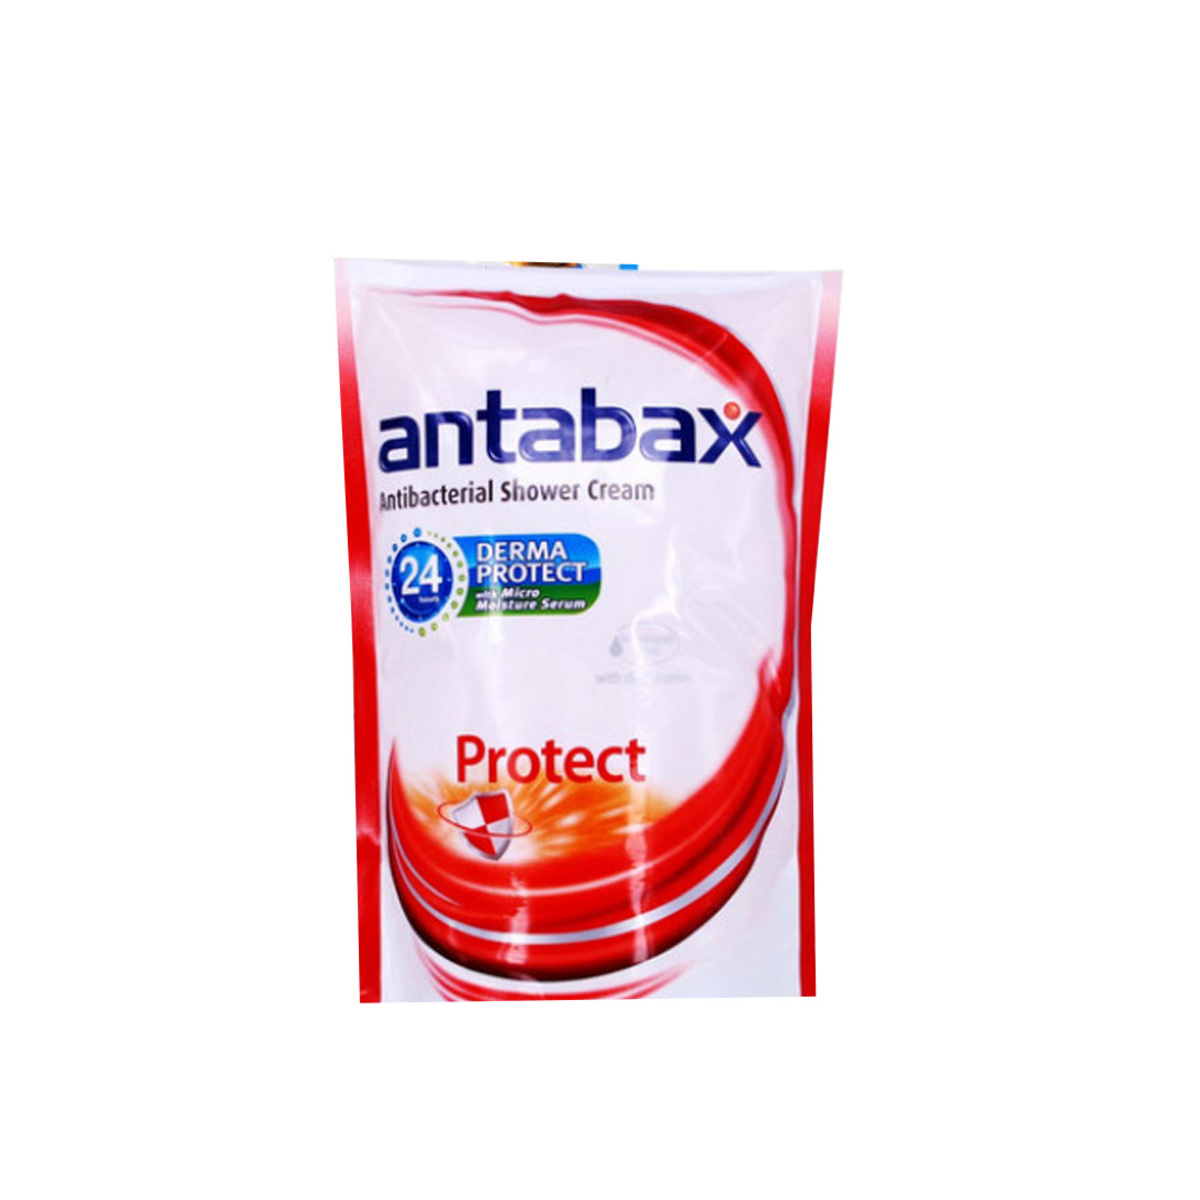 Antabax Shower Cream Protect 850ml